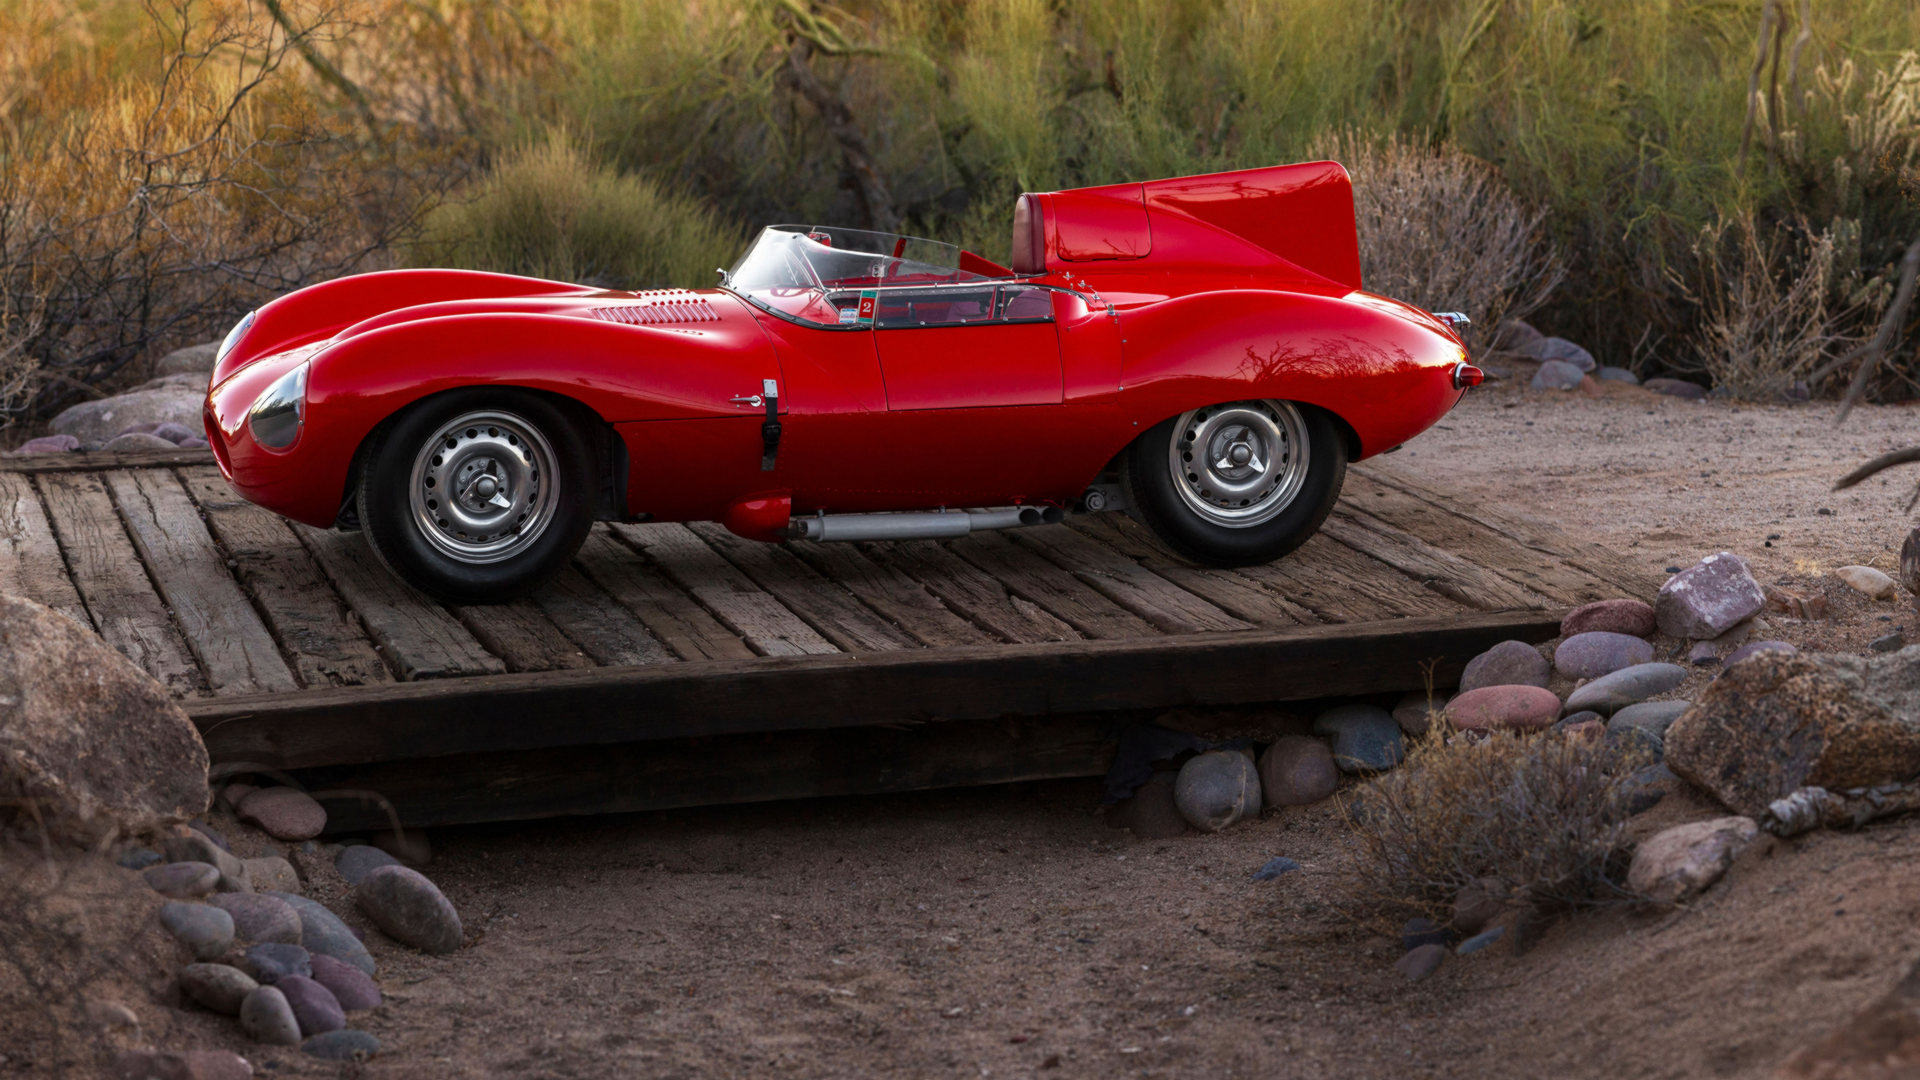 نمای جانبی جگوار دی تایپ کلاسیک مدل 1955 / 1955 Jaguar D-Type قرمز رنگ